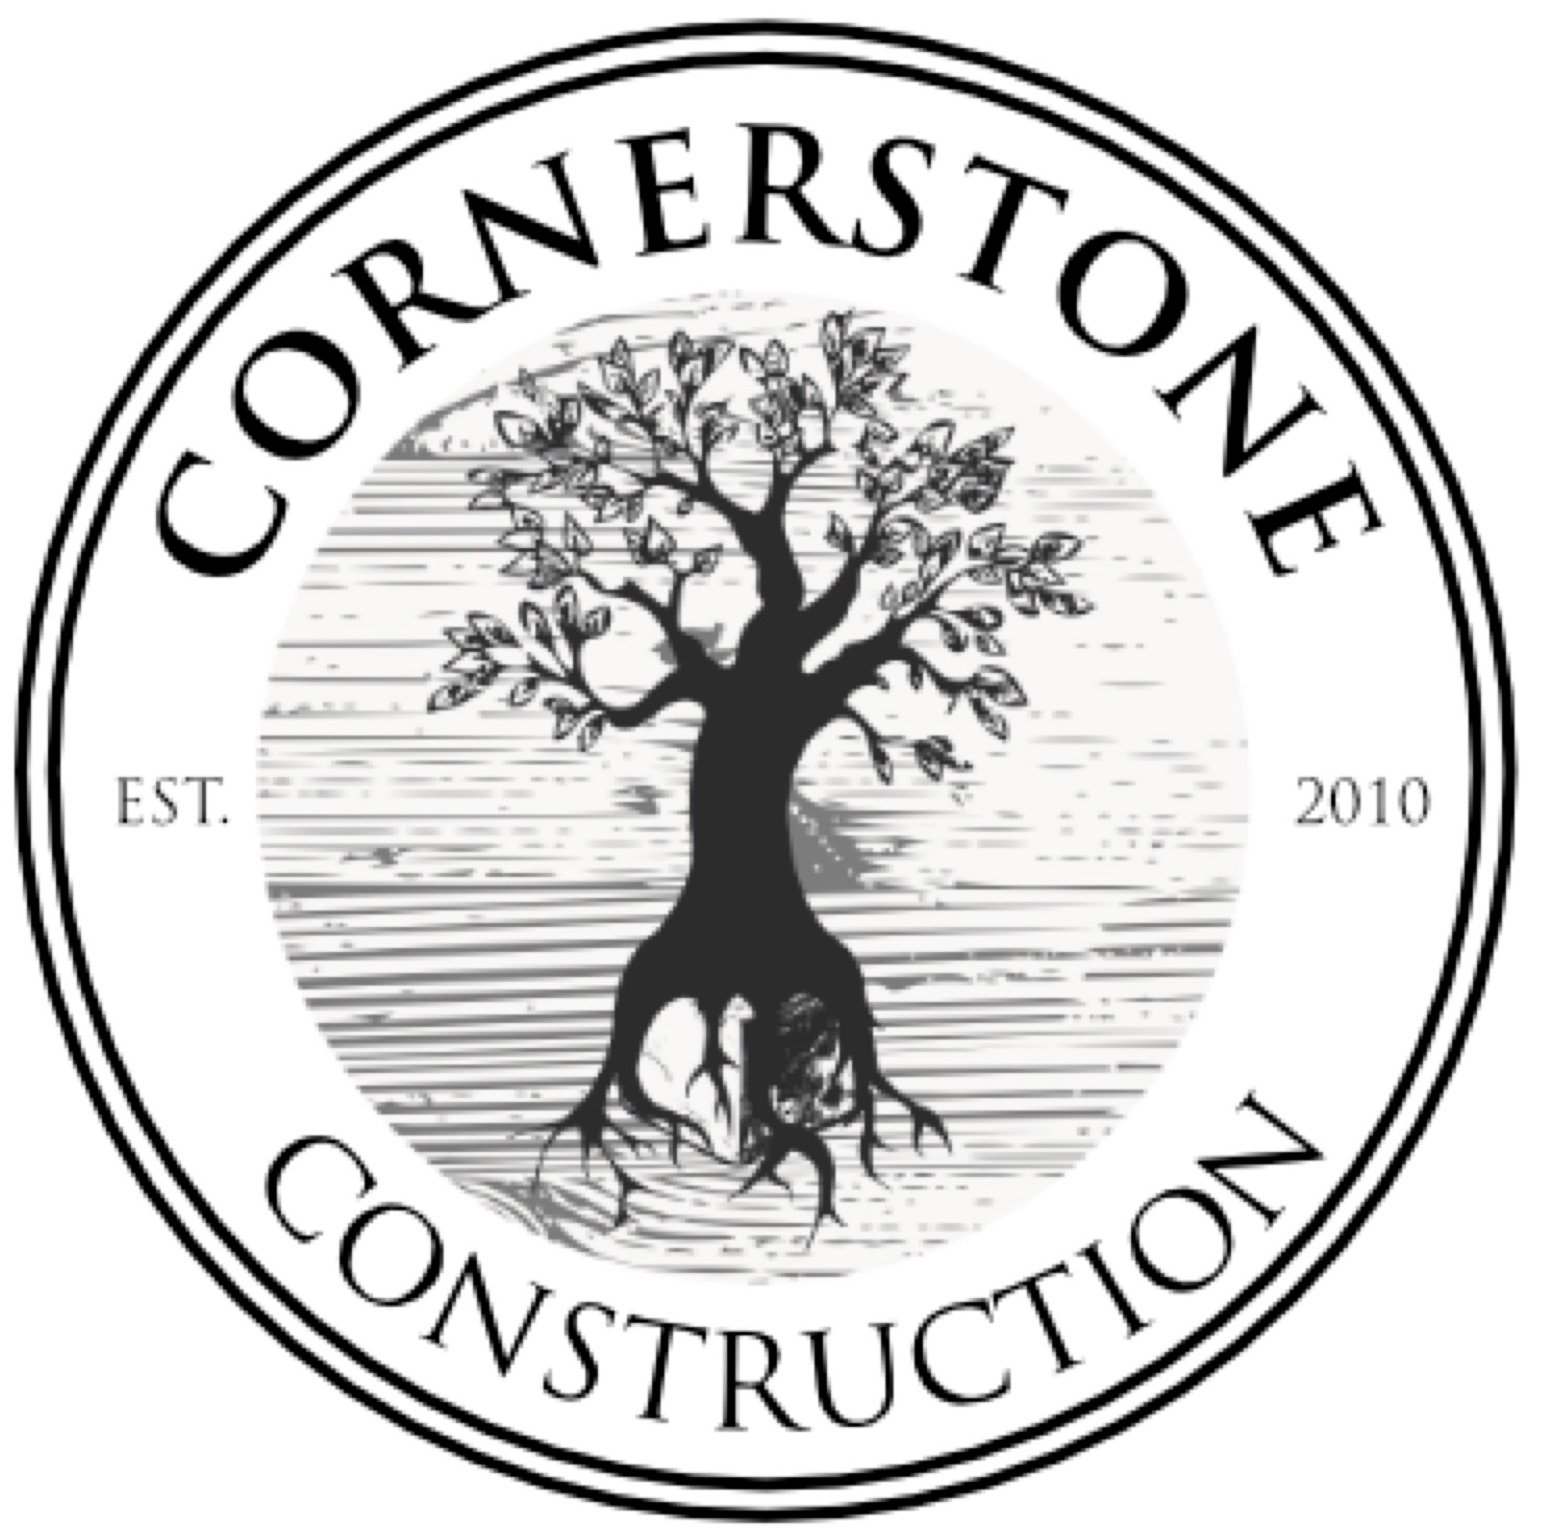 CornerStone Construction Corporation of the Carolinas Logo